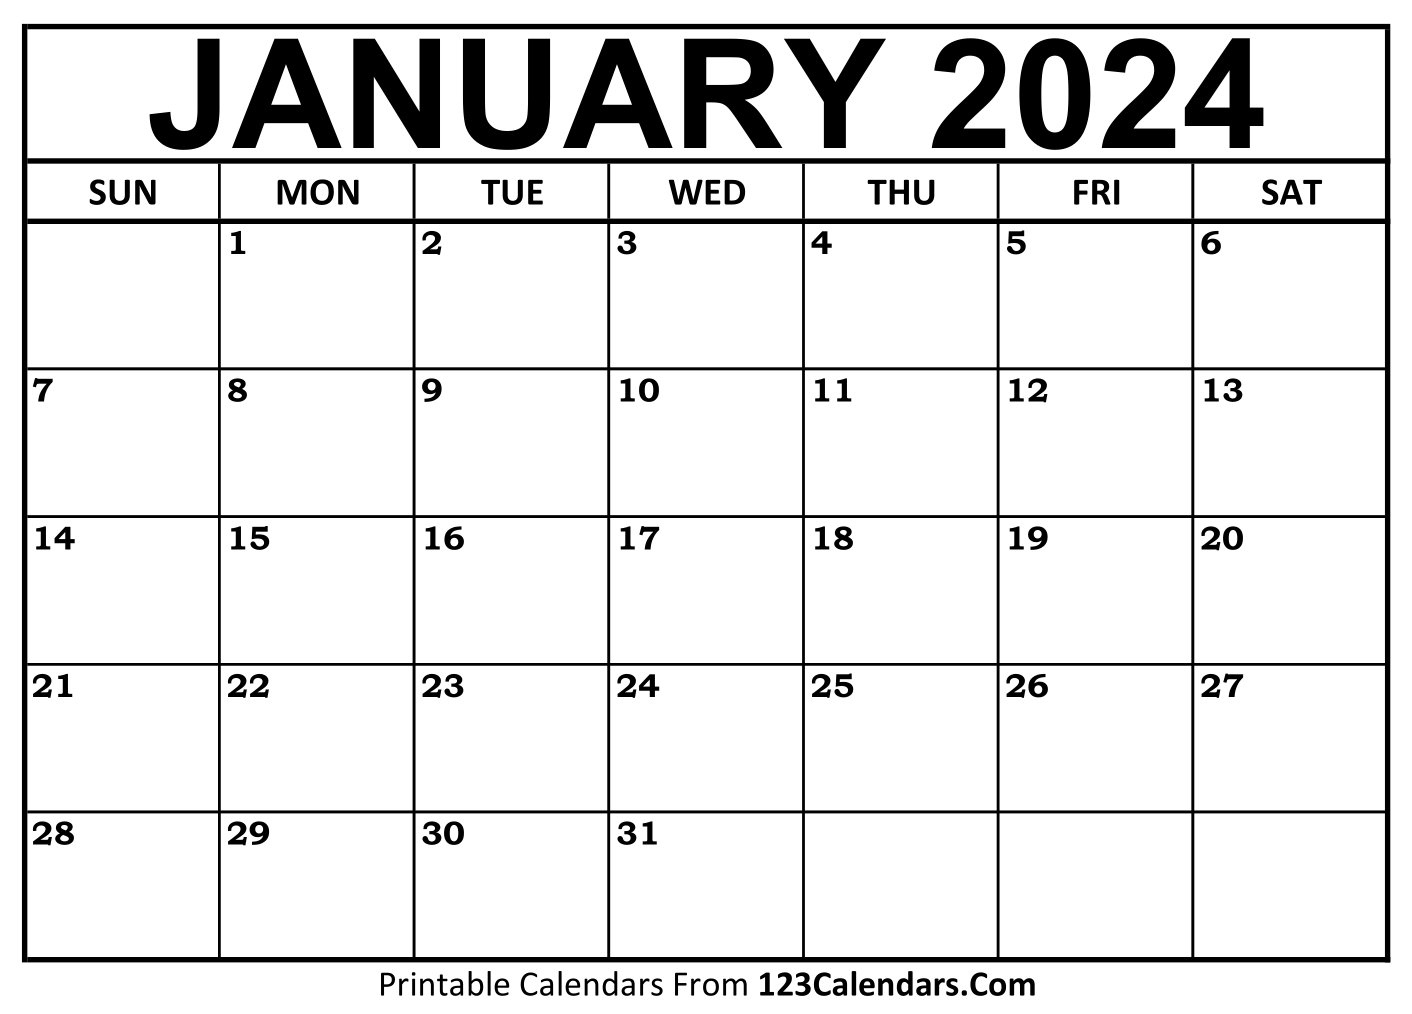 Printable January 2024 Calendar Templates - 123Calendars | Free Blank Printable Calendar 2024